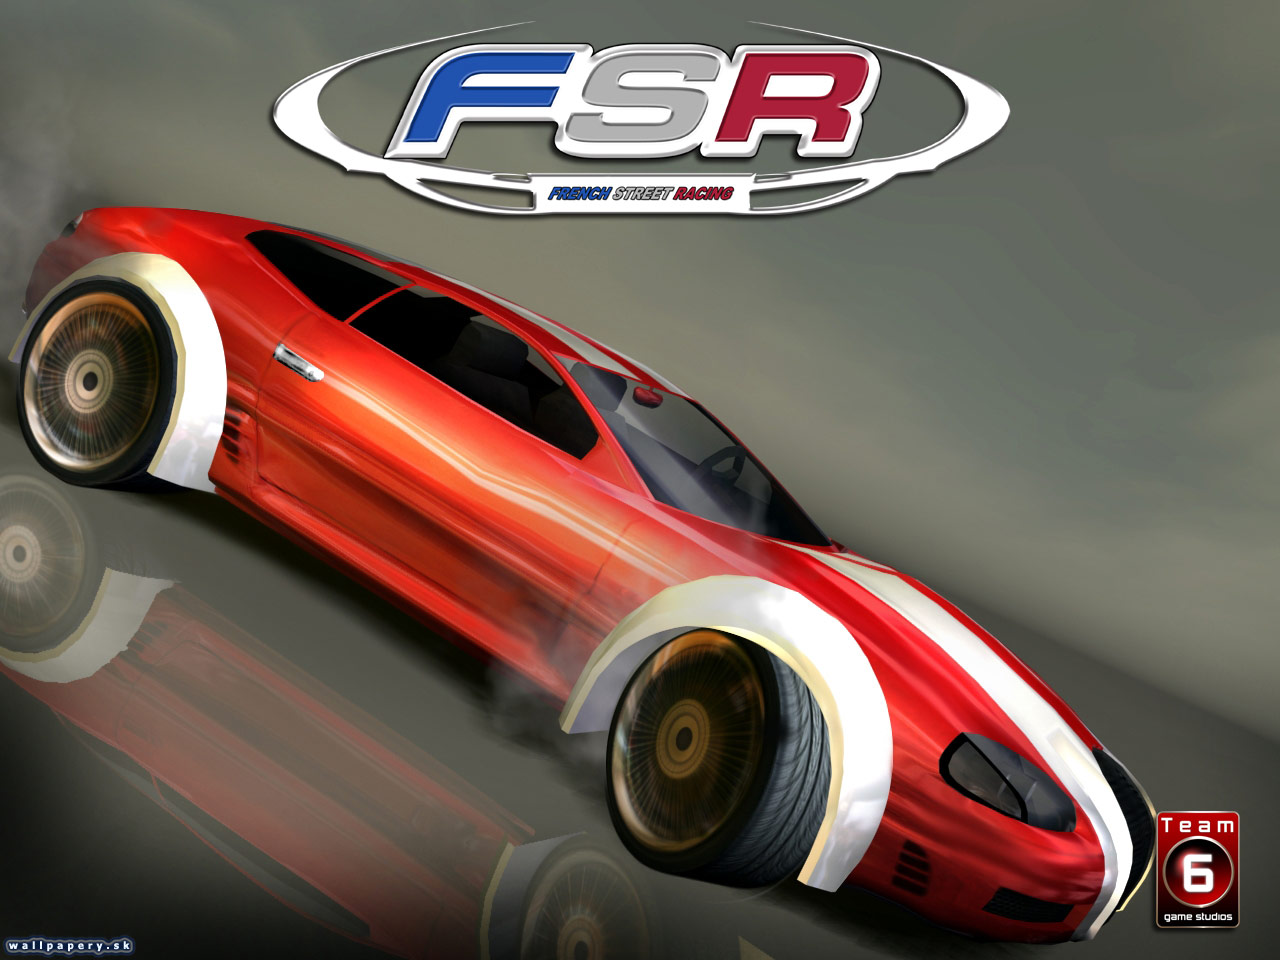 FSR - French Street Racing - wallpaper 2